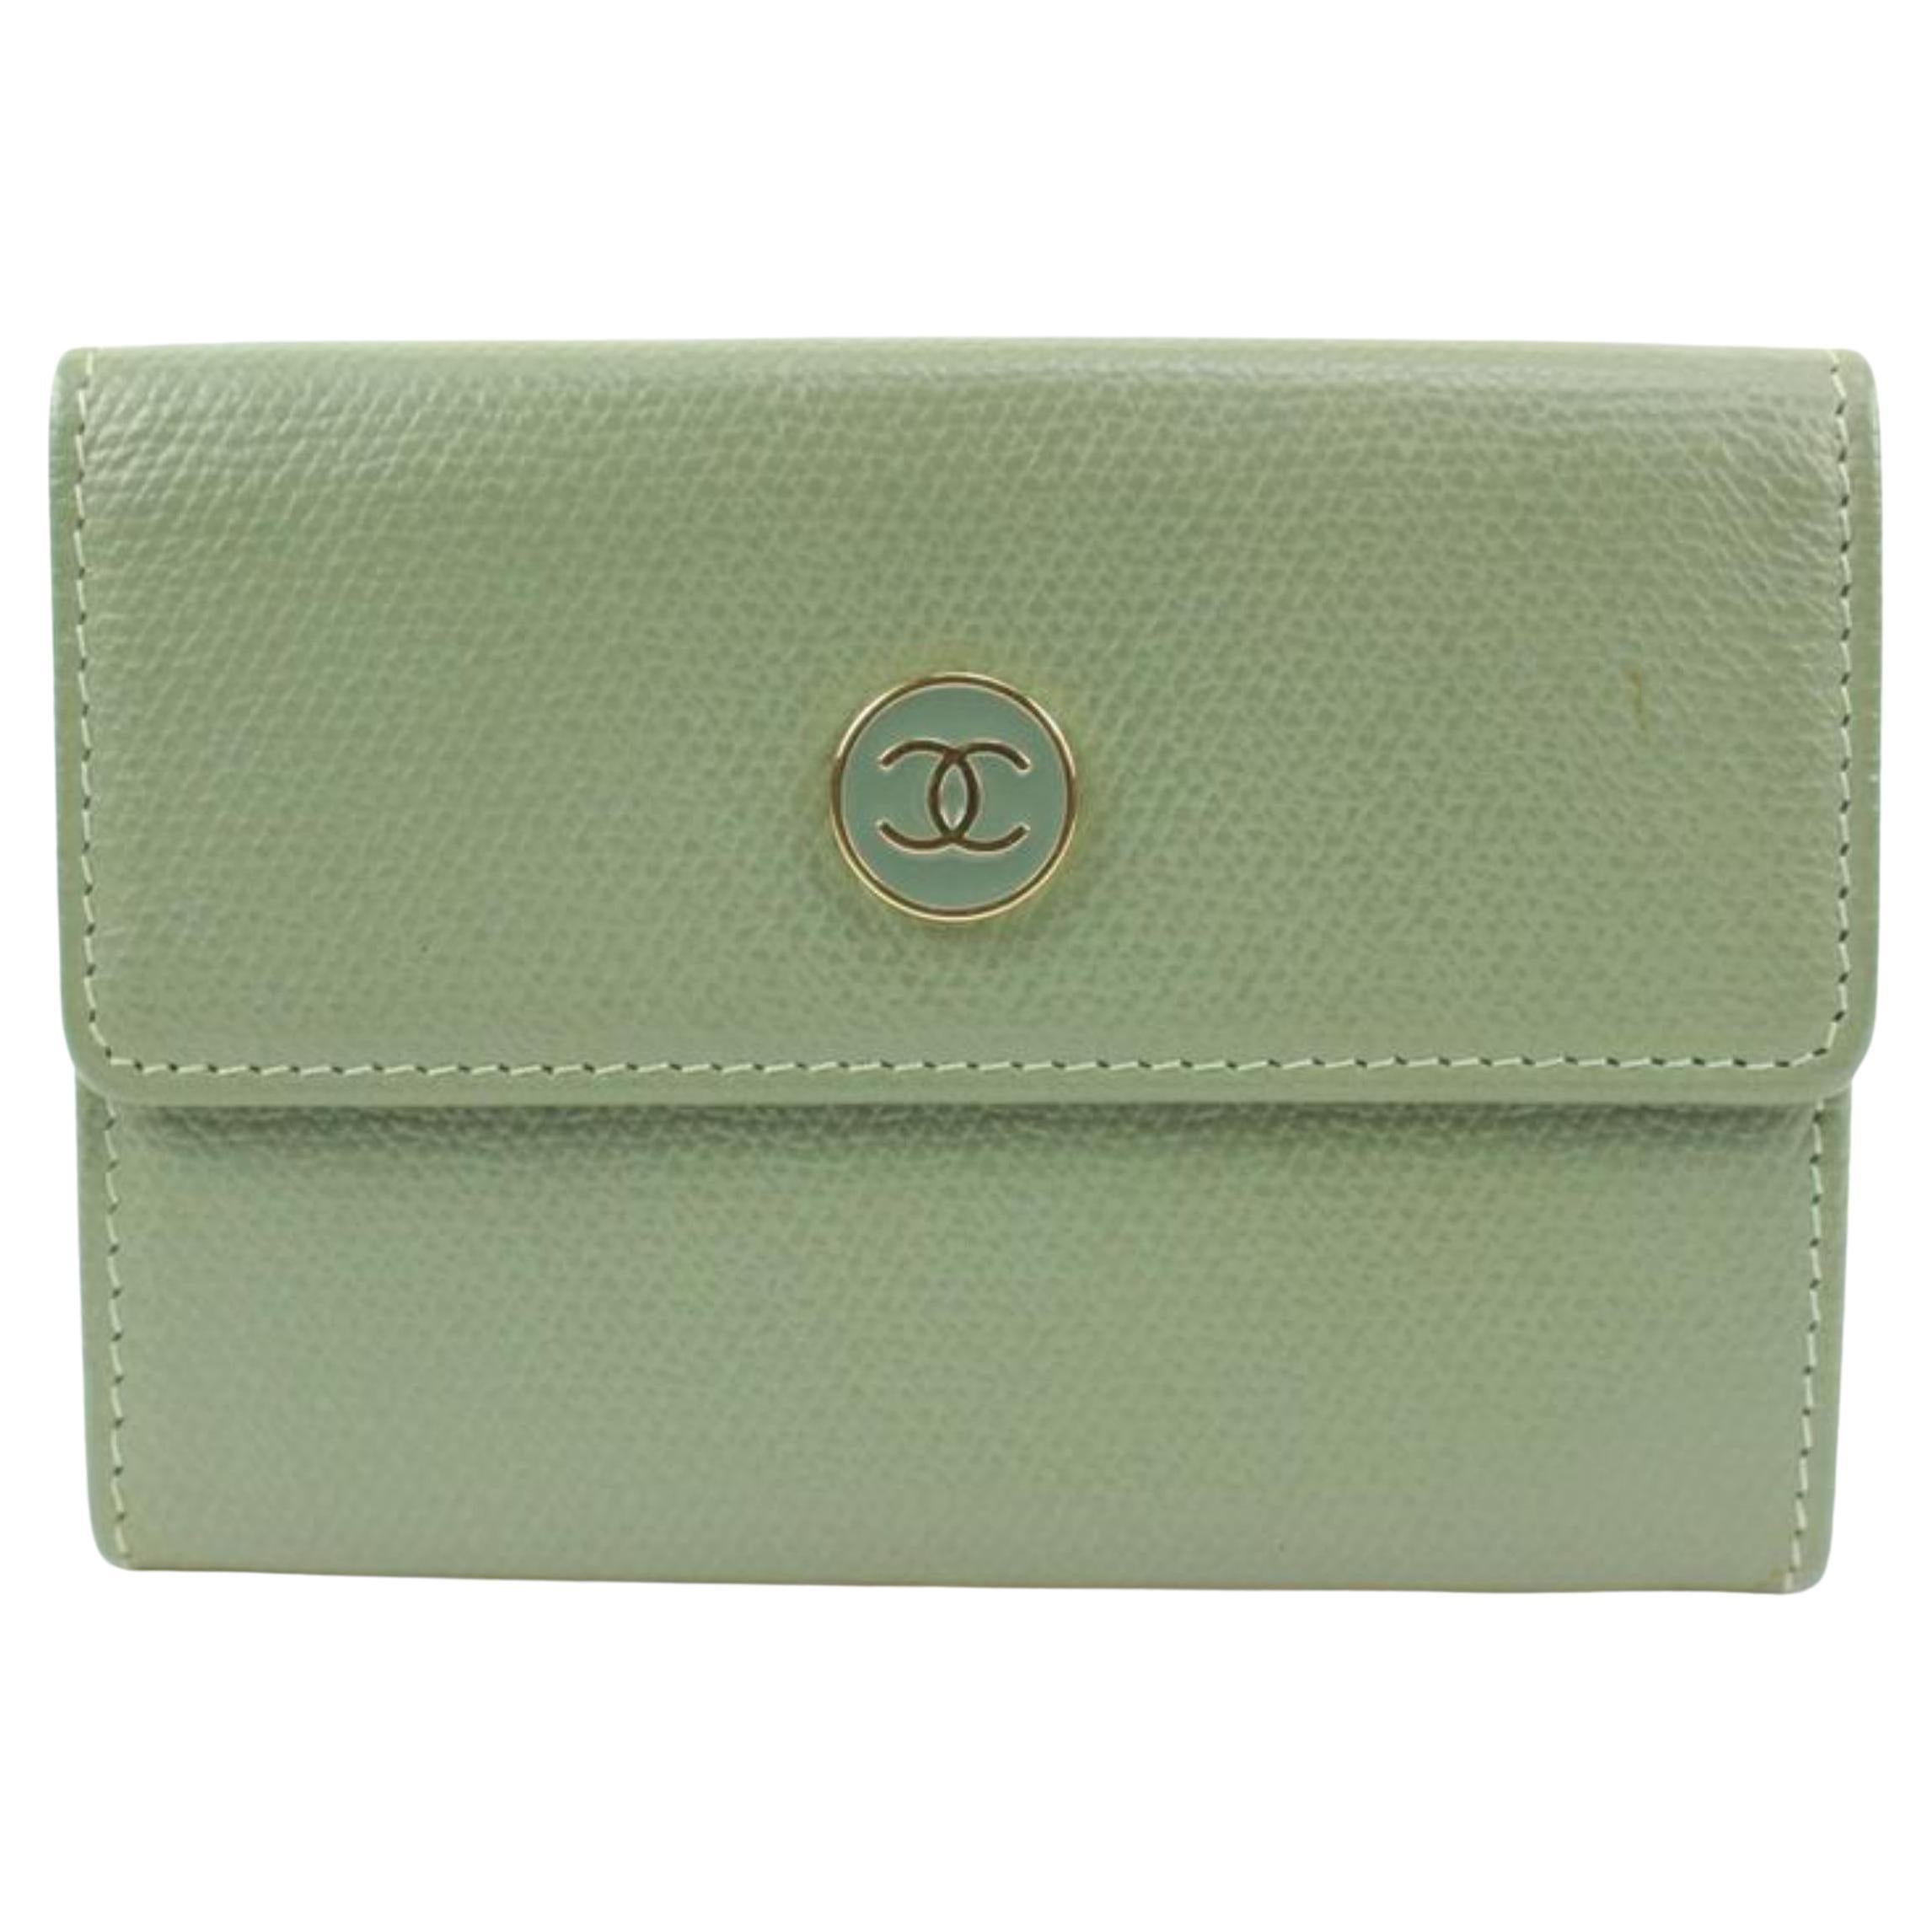 Chanel Sage Green Calfskin Button Line Card Holder Wallet Case 93ck228s